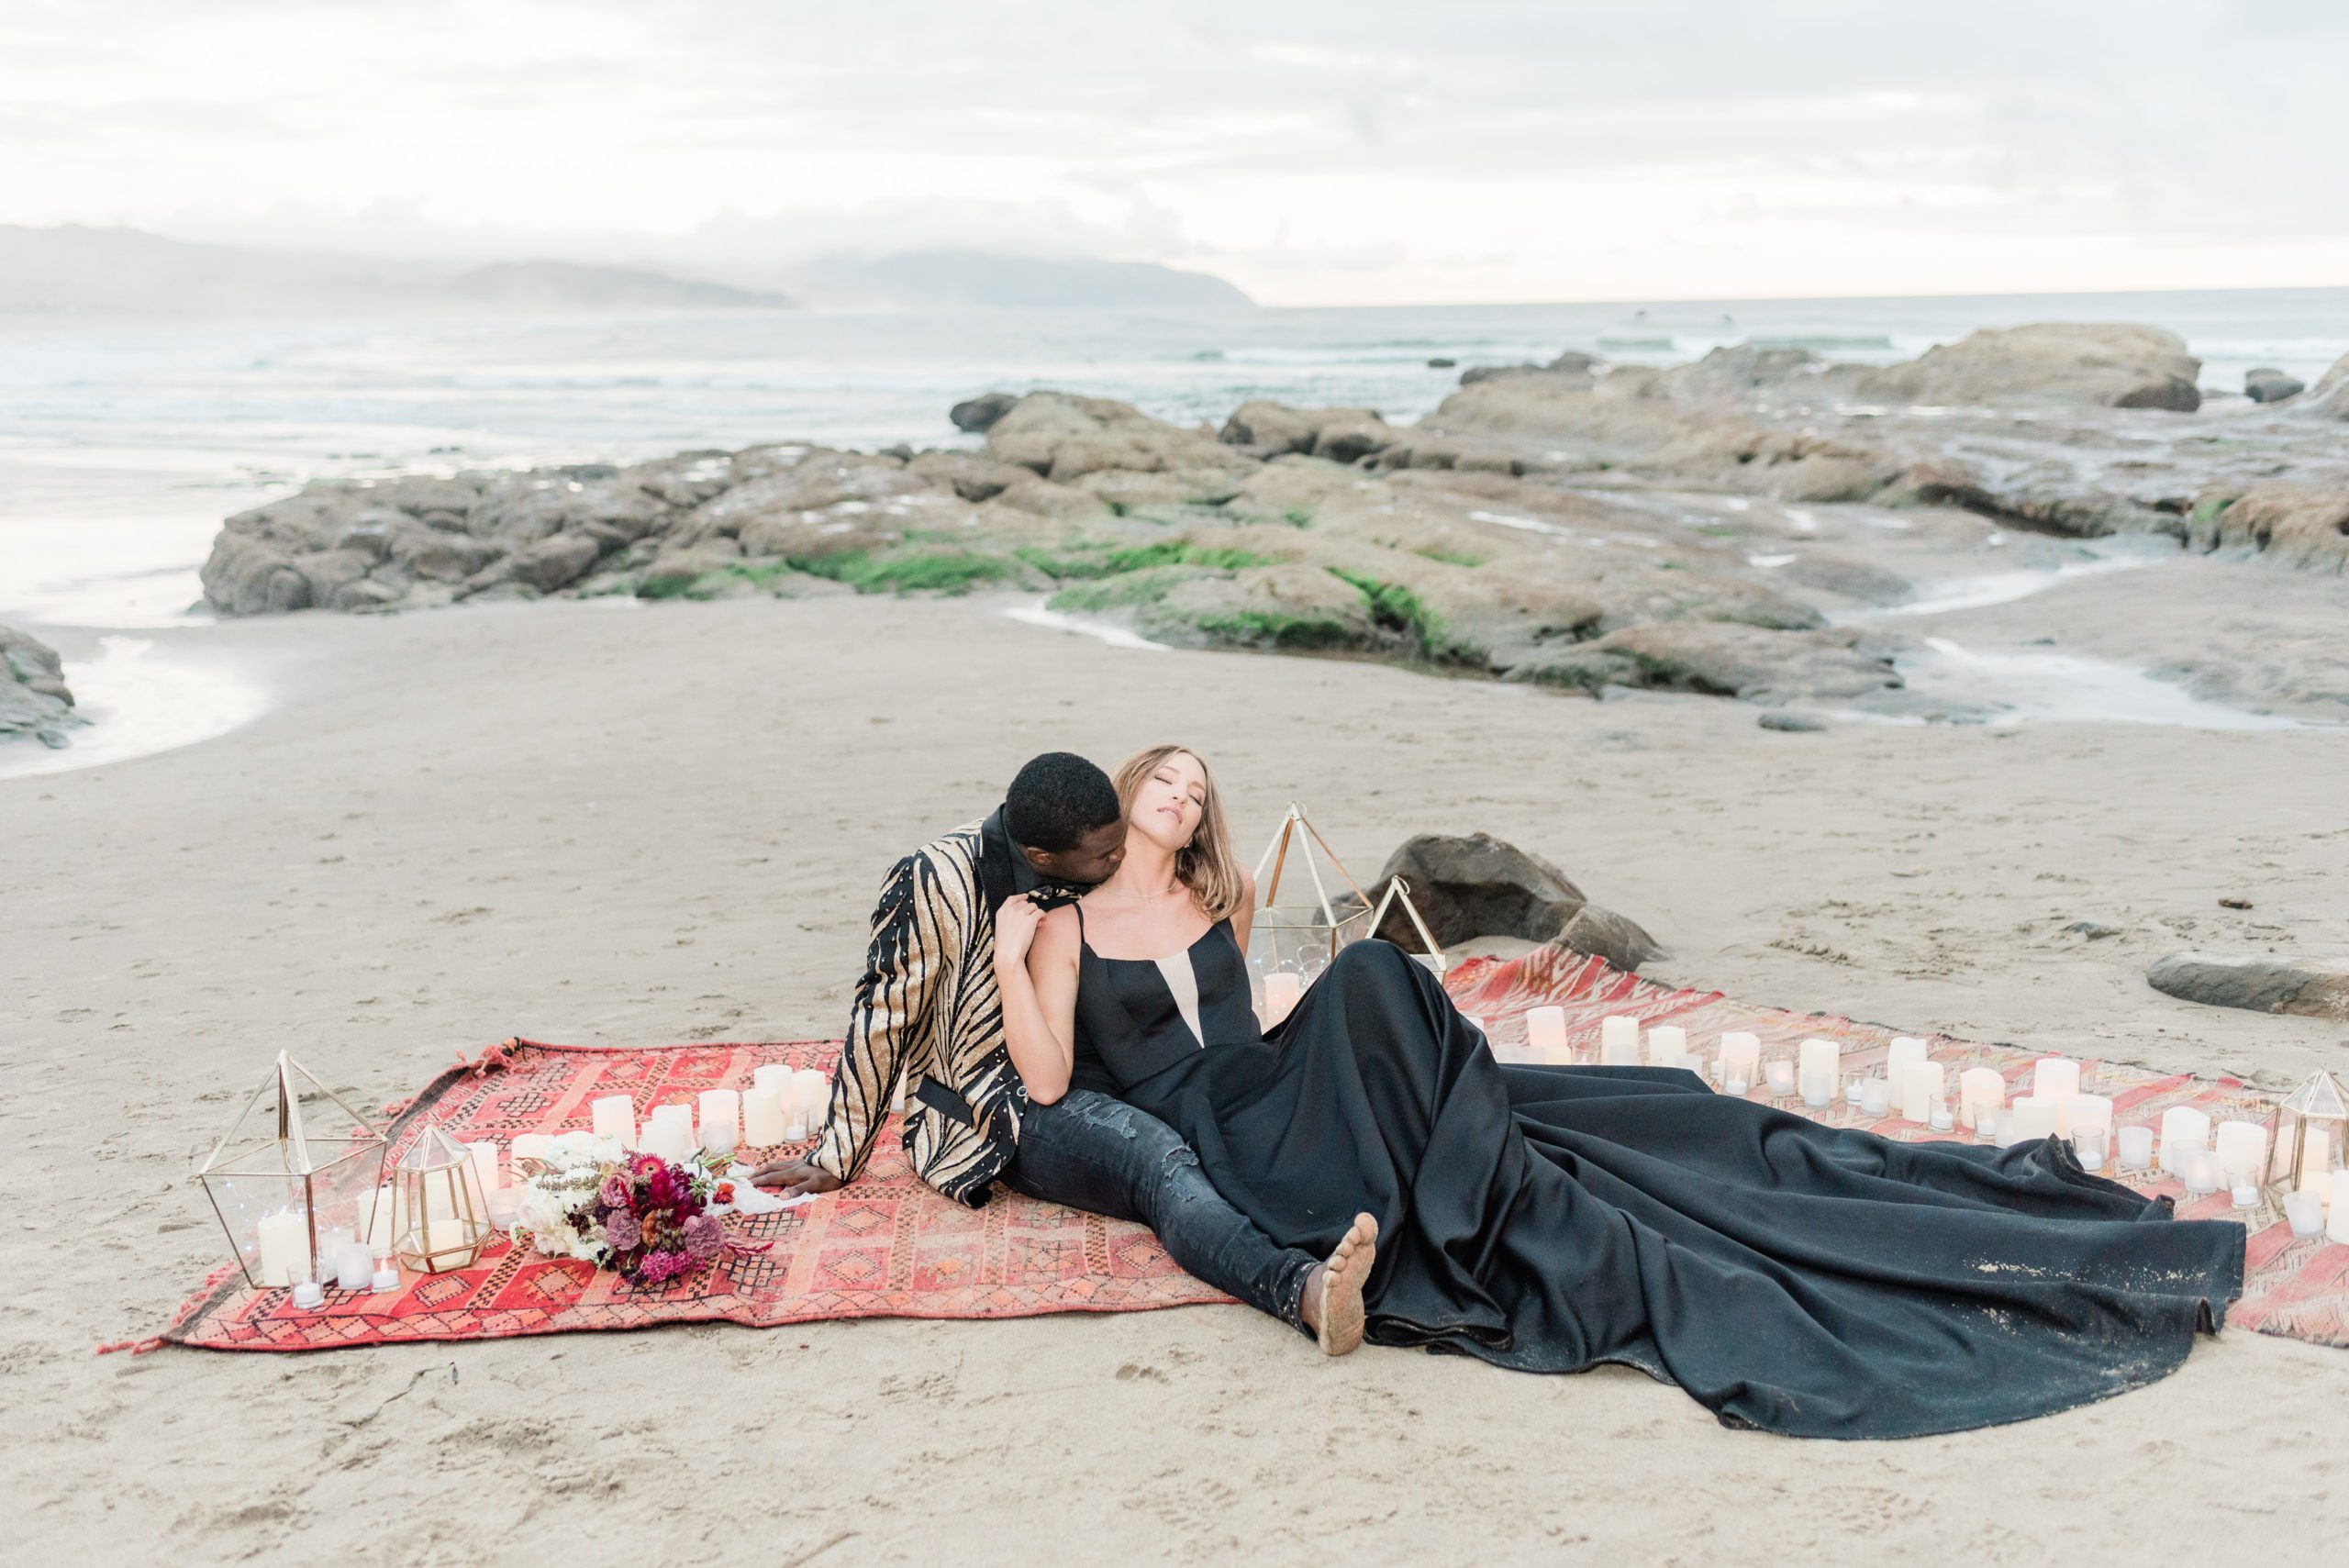 LGBTQ+ Seattle Photographer list of preferred wedding vendors.